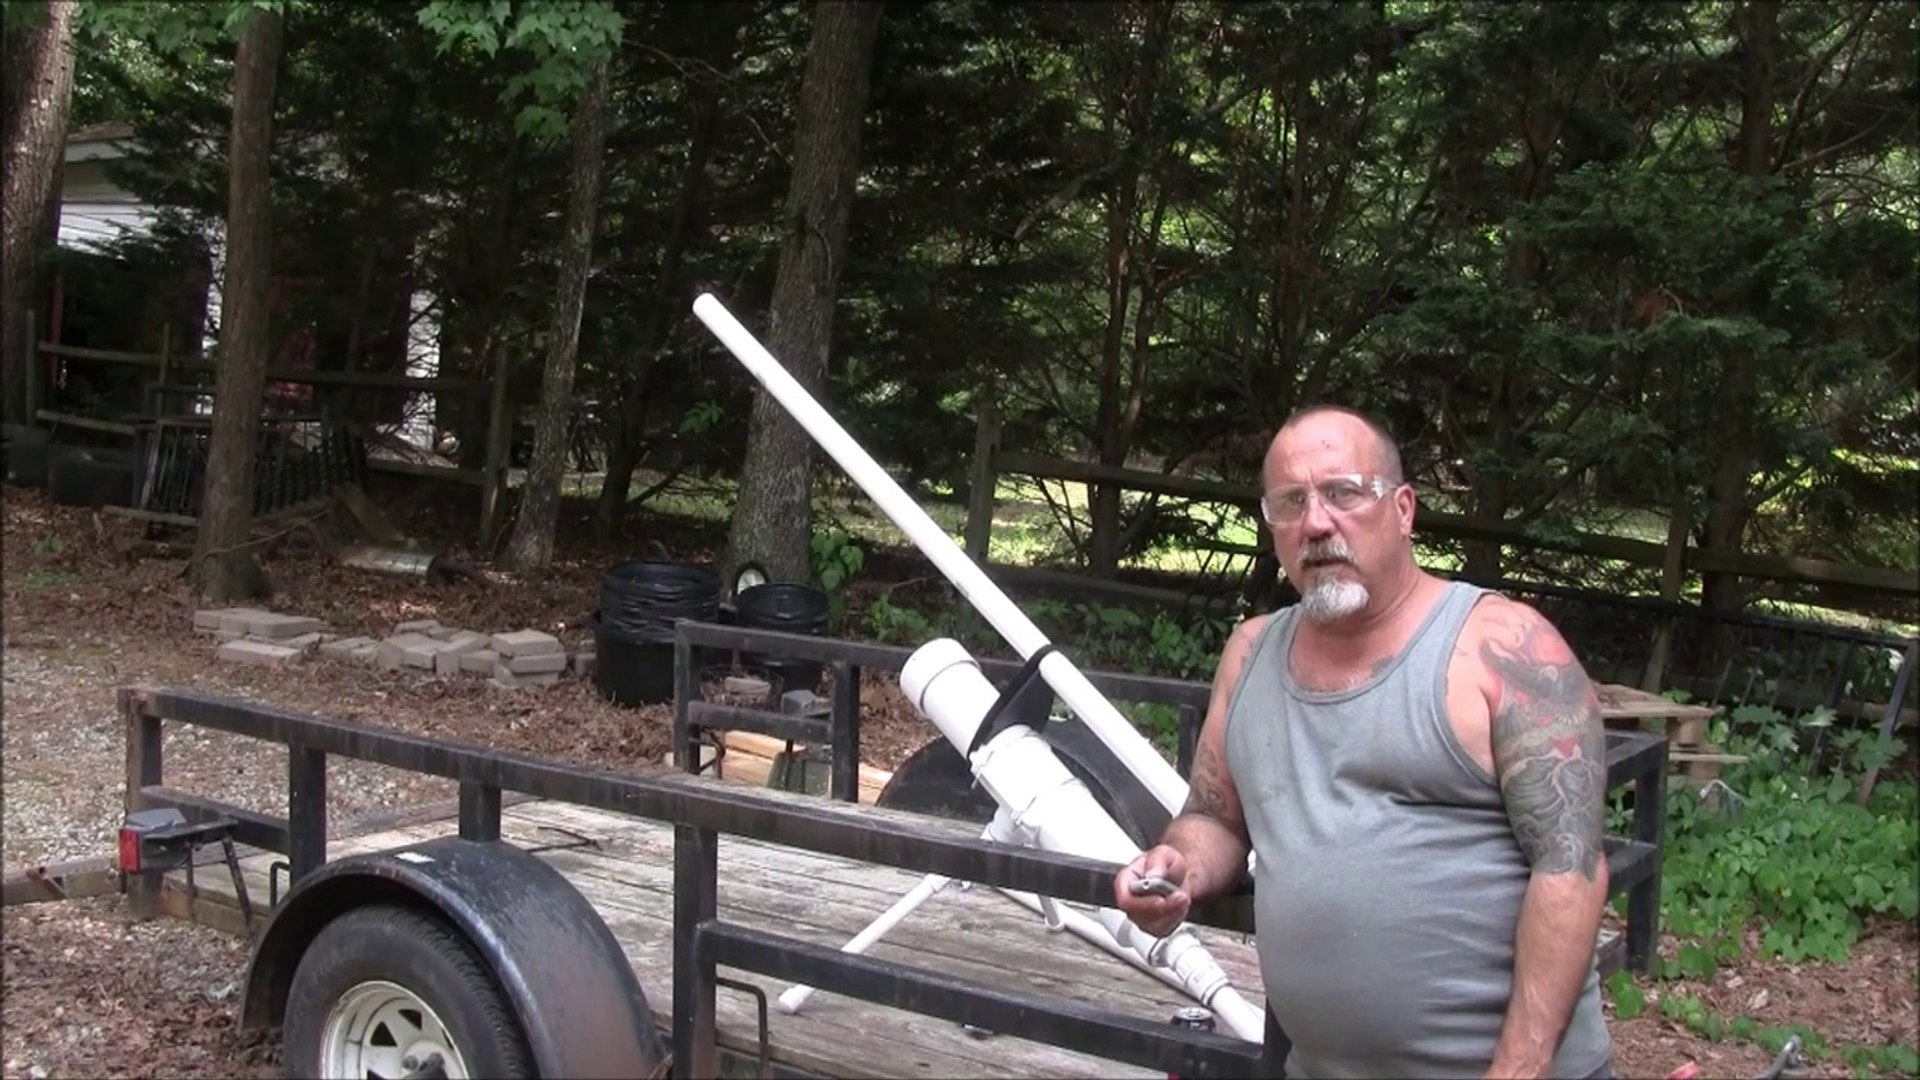 How to Build an Air Power Fish Bait Launcher, Spud Gun - DIY Surf Fishing  Air Cannon - video Dailymotion